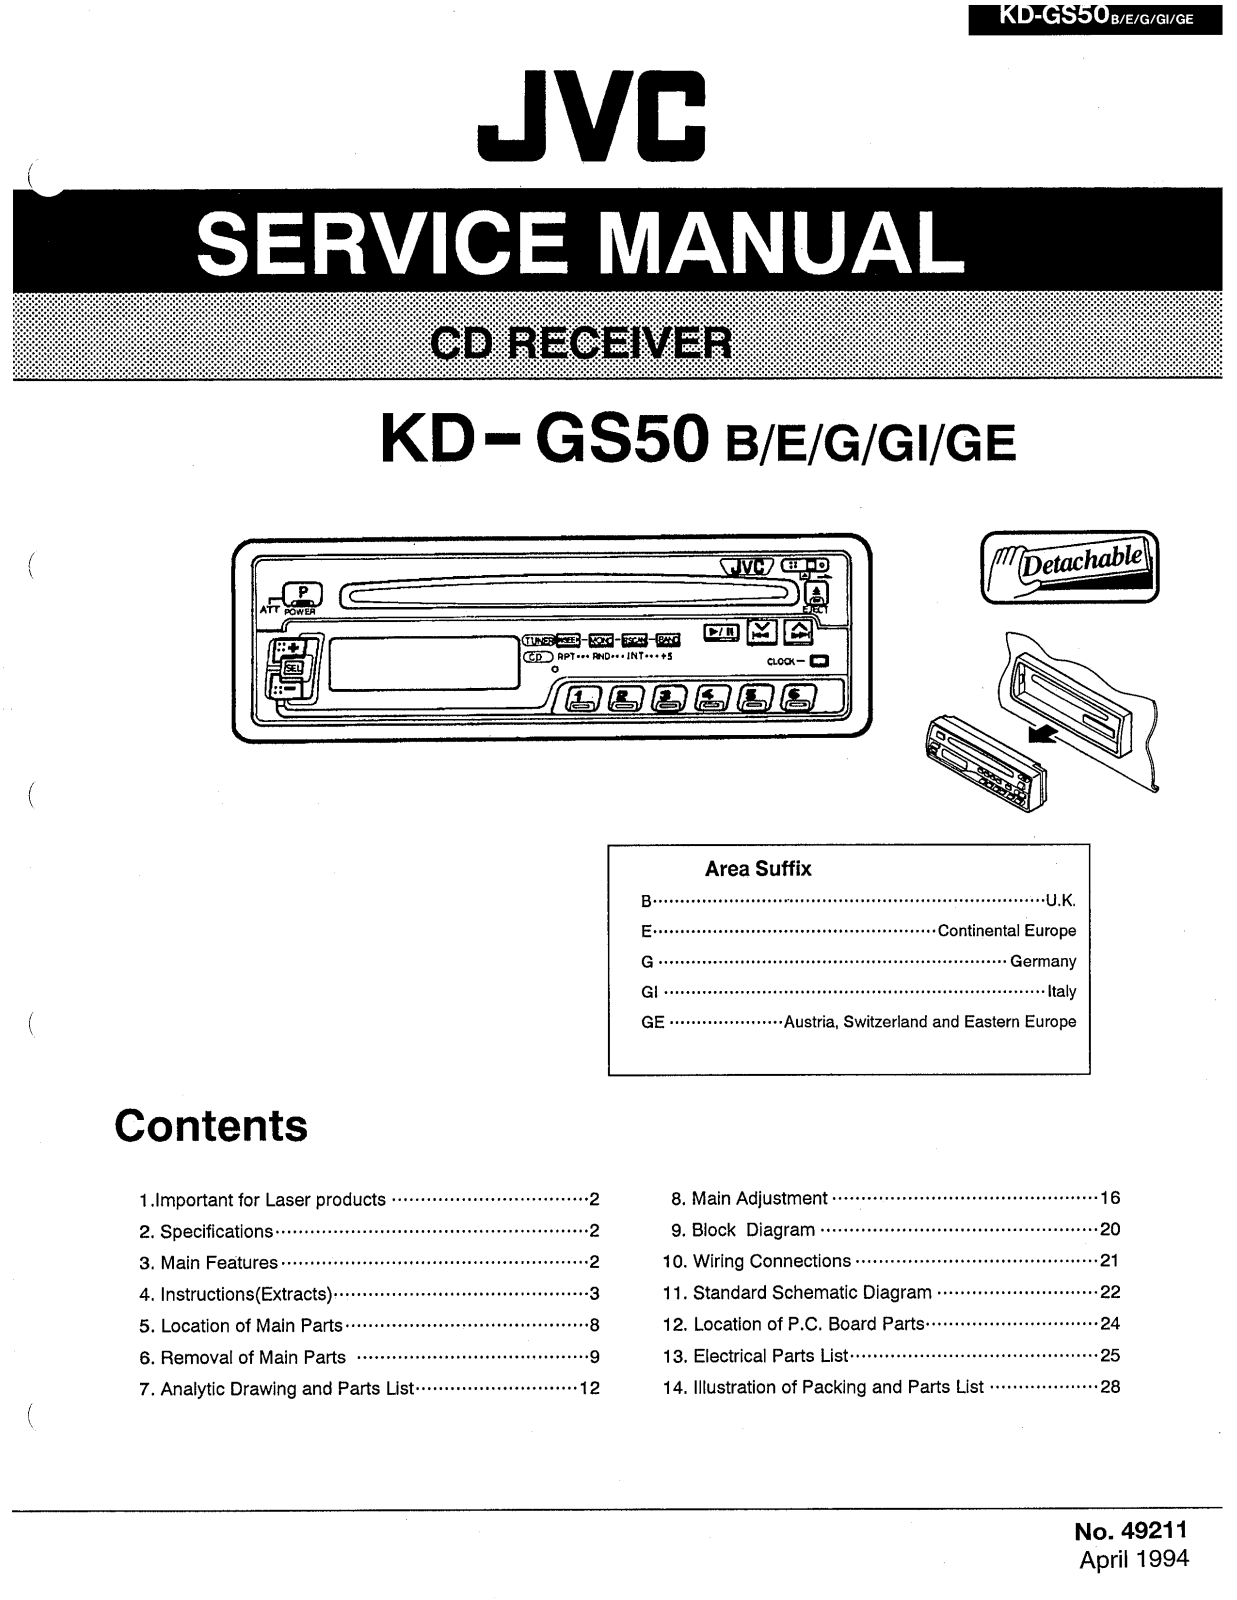 JVC KD-GS50B, KD-GS50E, KD-GS50G, KD-GS50GE, KD-GS50GI Service Manual